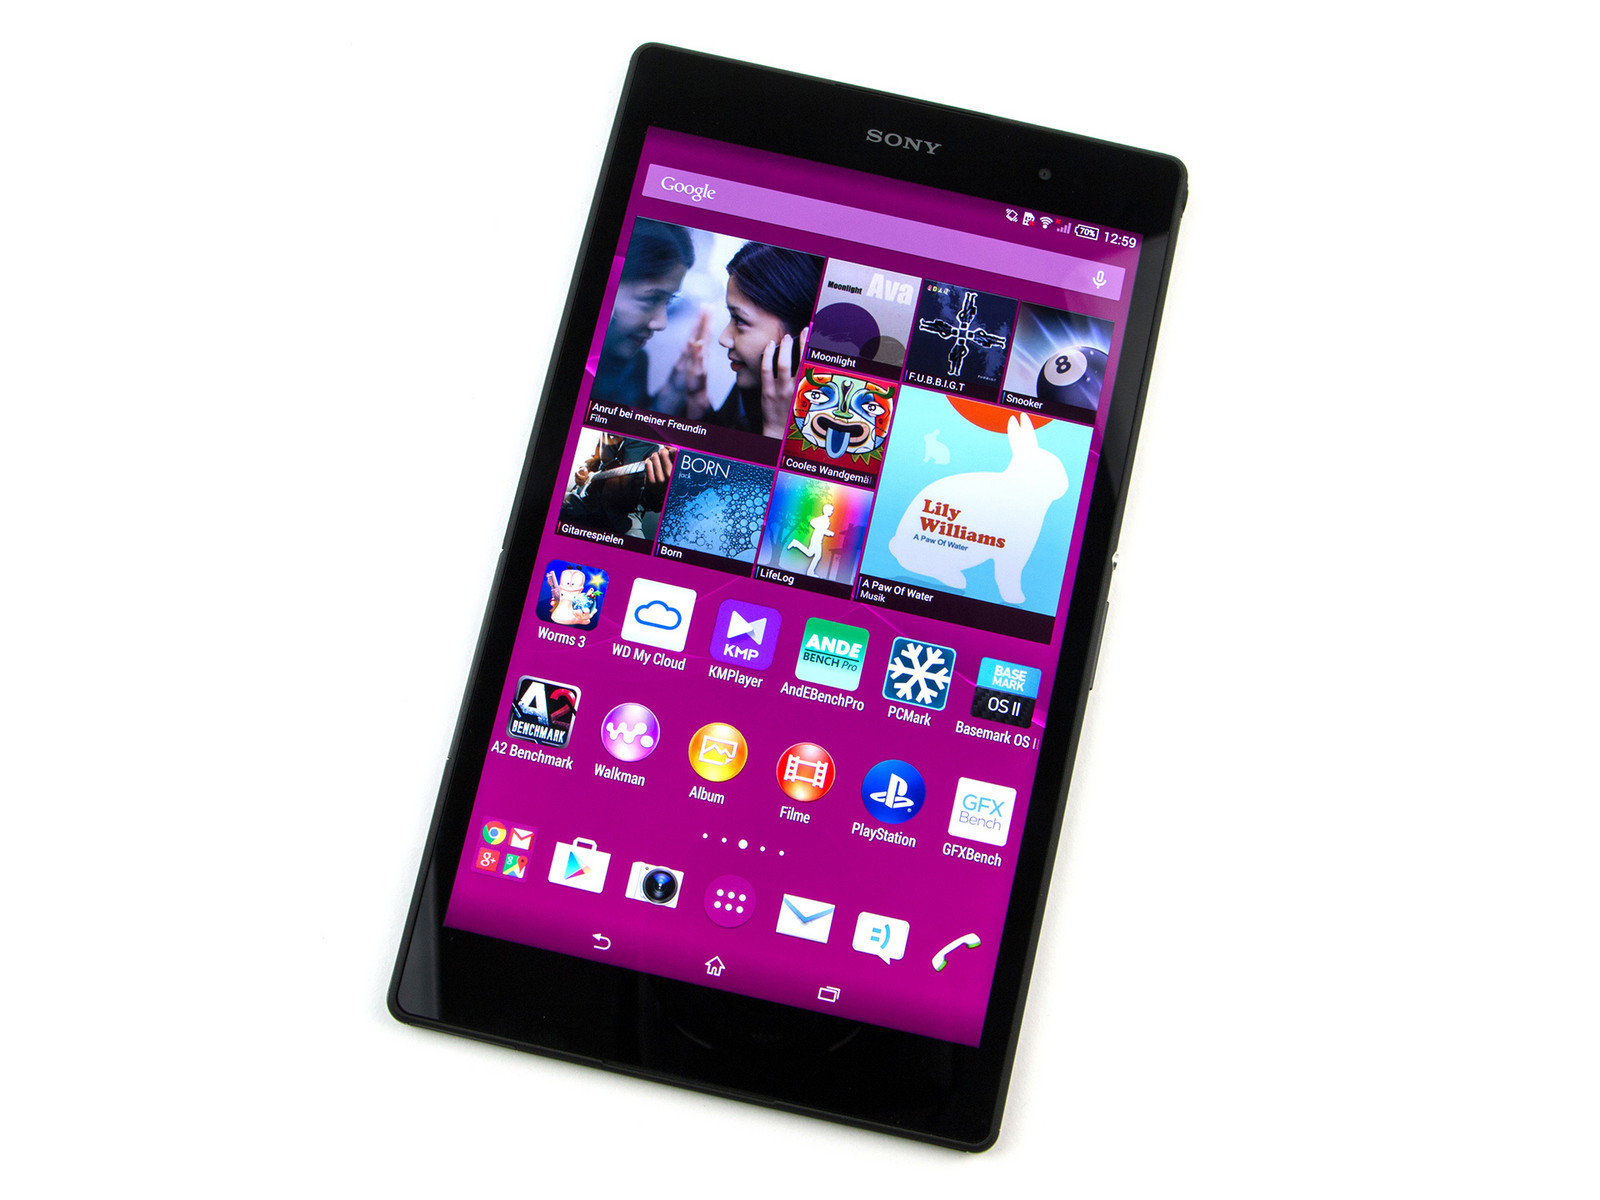 Alexander Graham Bell At understrege slids Sony Xperia Z3 Tablet Compact - Notebookcheck.net External Reviews